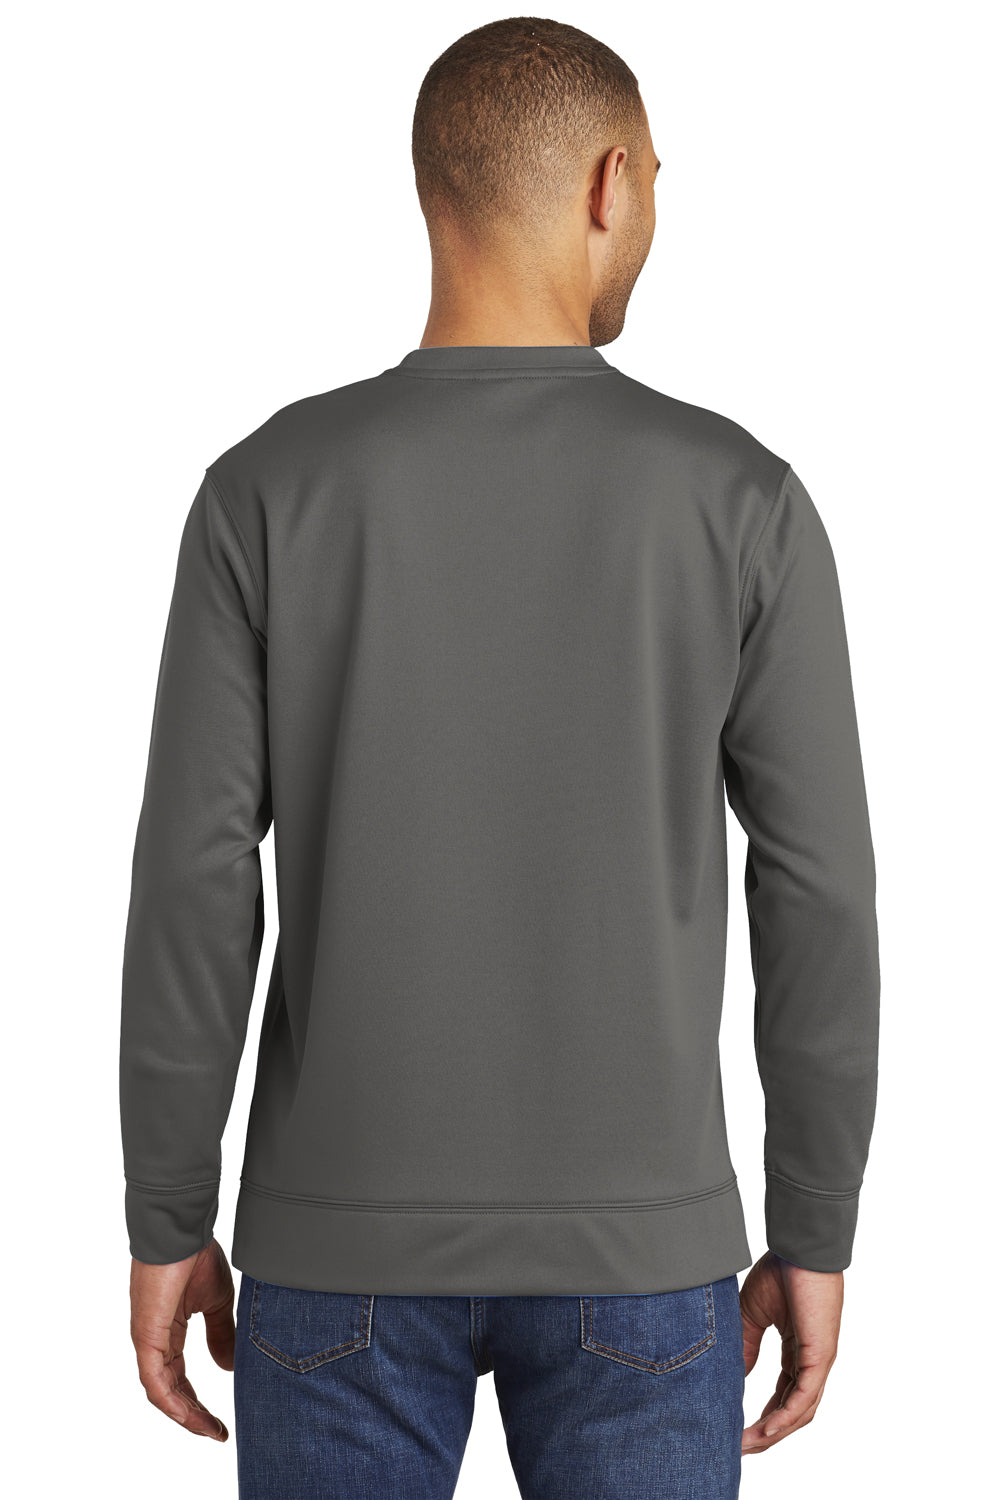 Port & Company PC590 Mens Dry Zone Performance Moisture Wicking Fleece Crewneck Sweatshirt Charcoal Grey Back